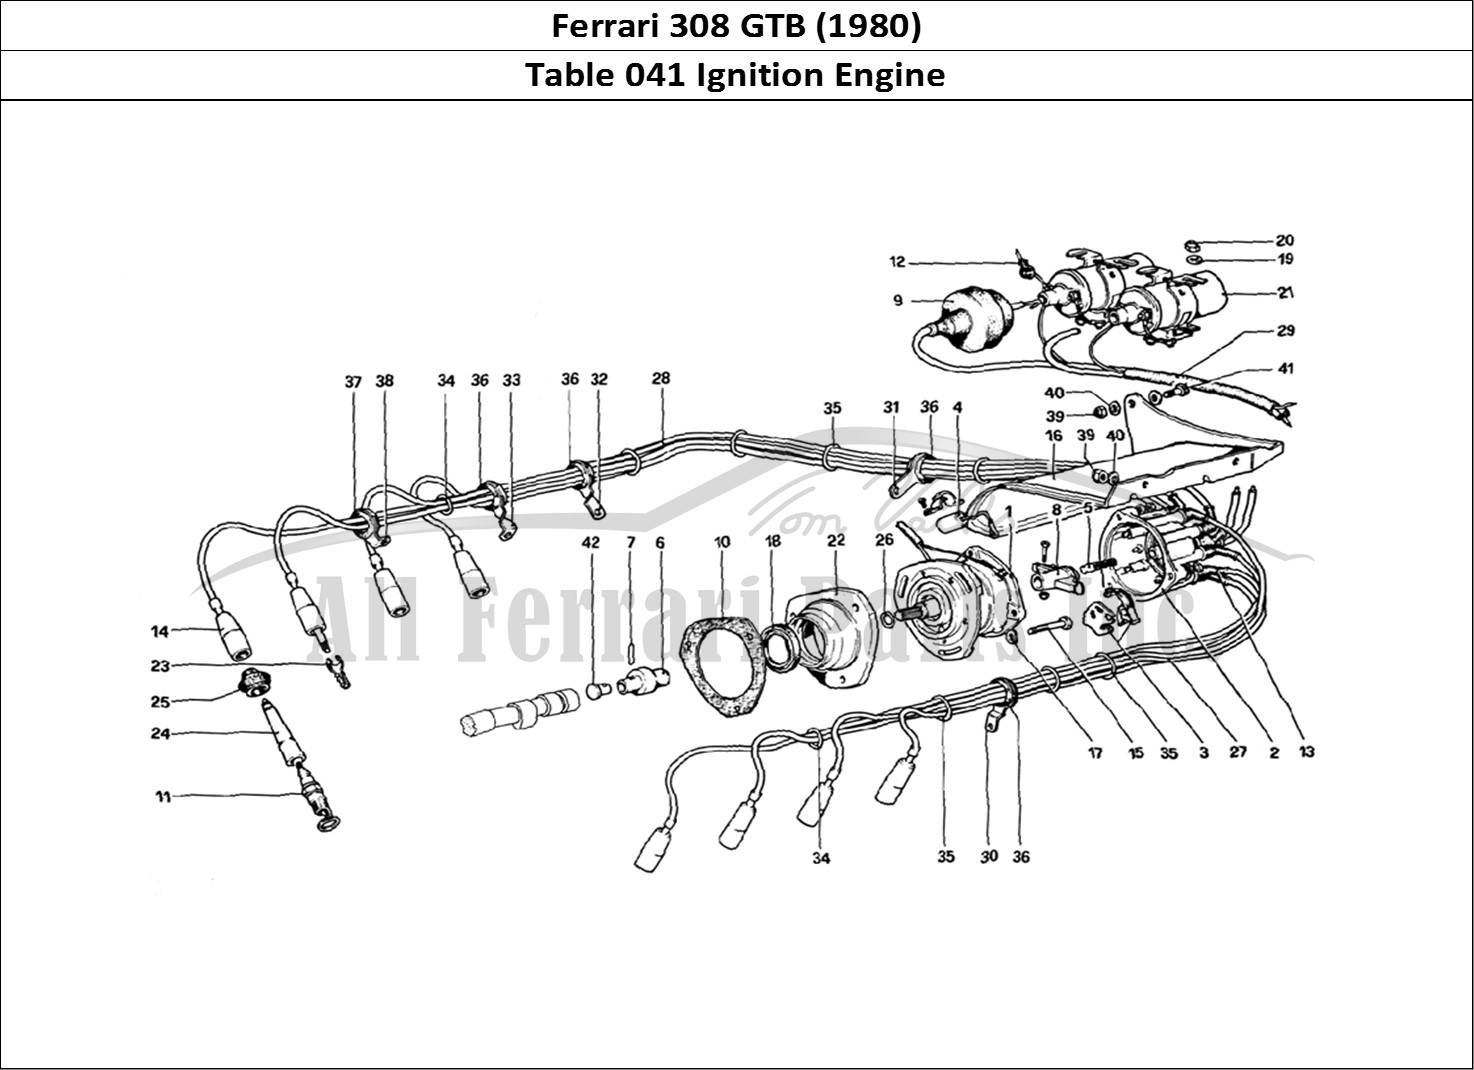 Ferrari Parts Ferrari 308 GTB (1980) Page 041 Engine Ignition